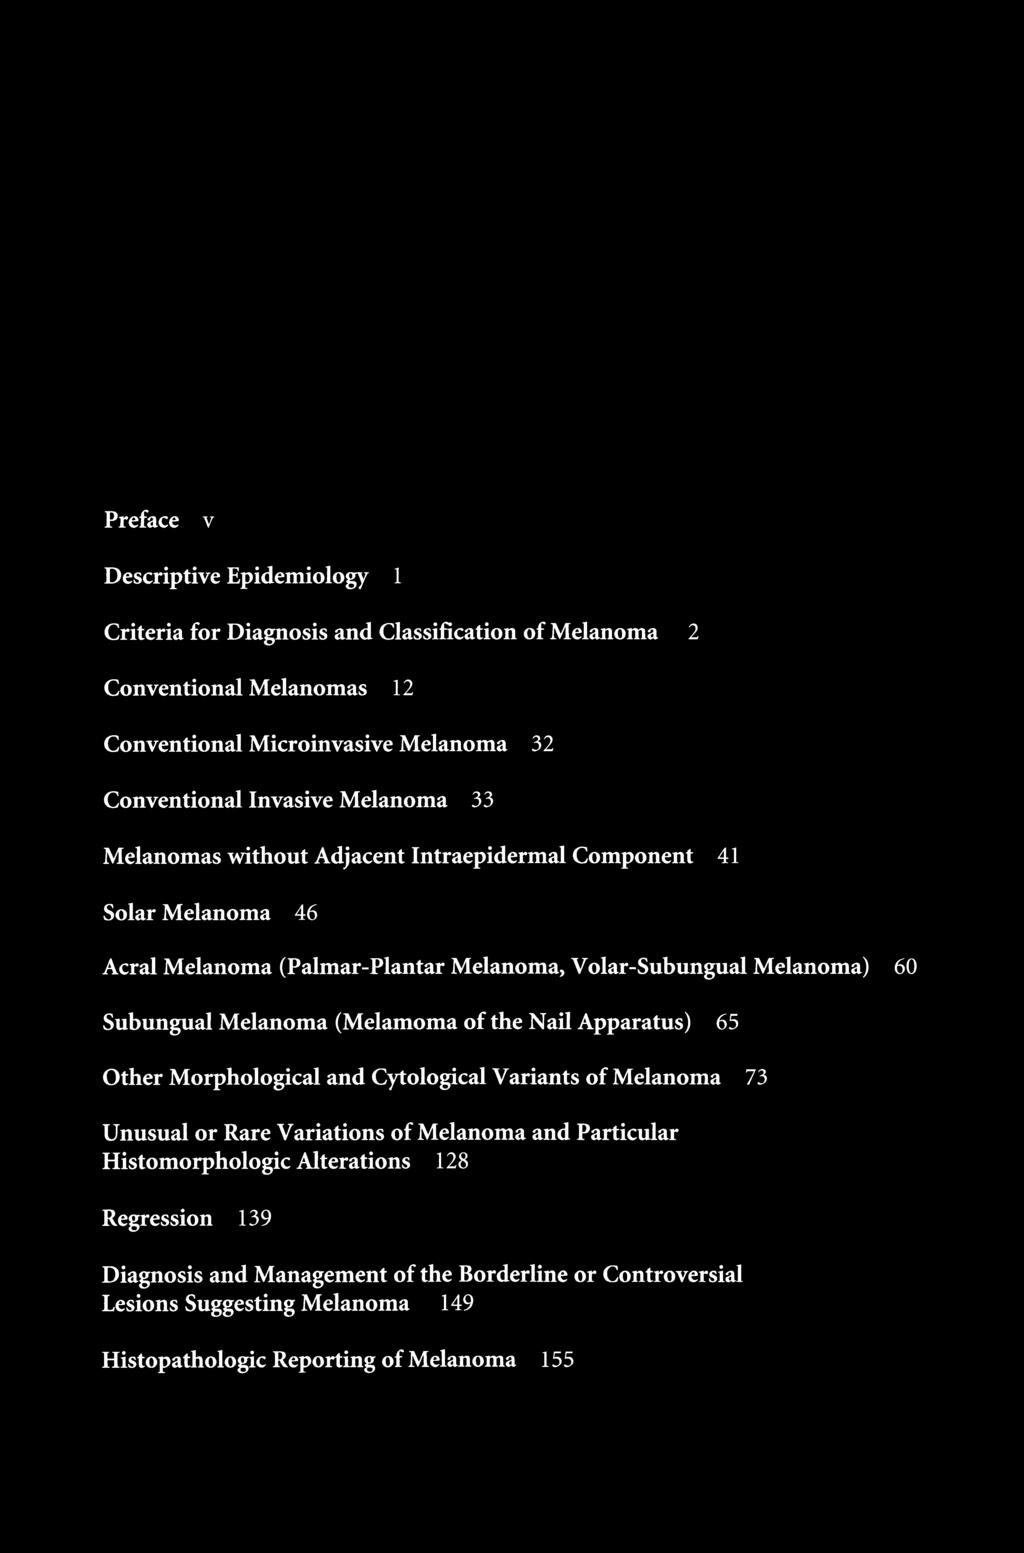 Preface v Descriptive Epidemiology 1 Criteria for Diagnosis and Classification of Melanoma 2 Conventional Melanomas 12 Conventional Microinvasive Melanoma 32 Conventional